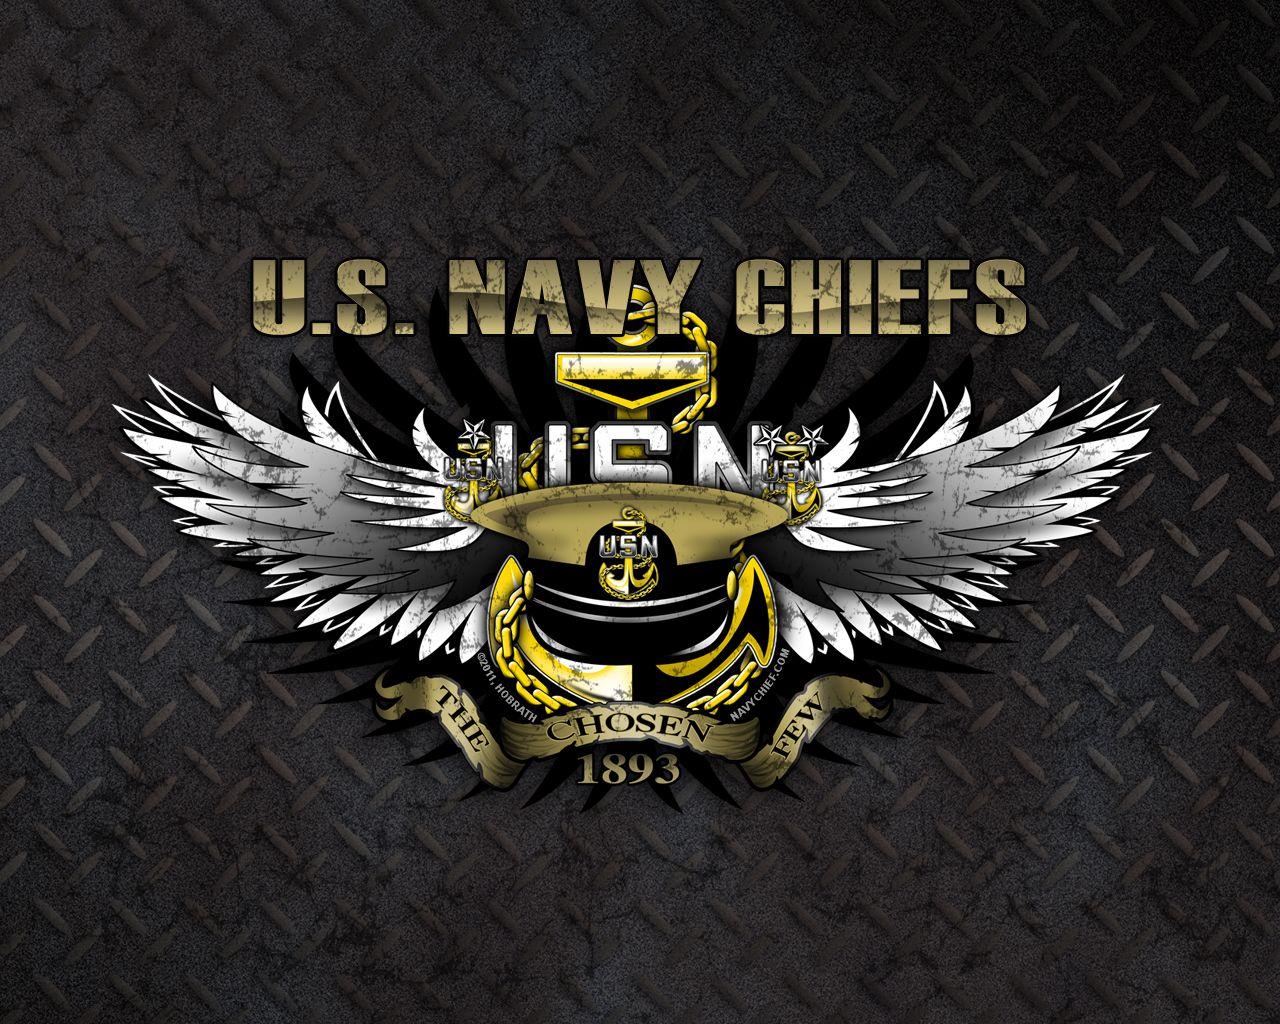 navy seals trident wallpaper